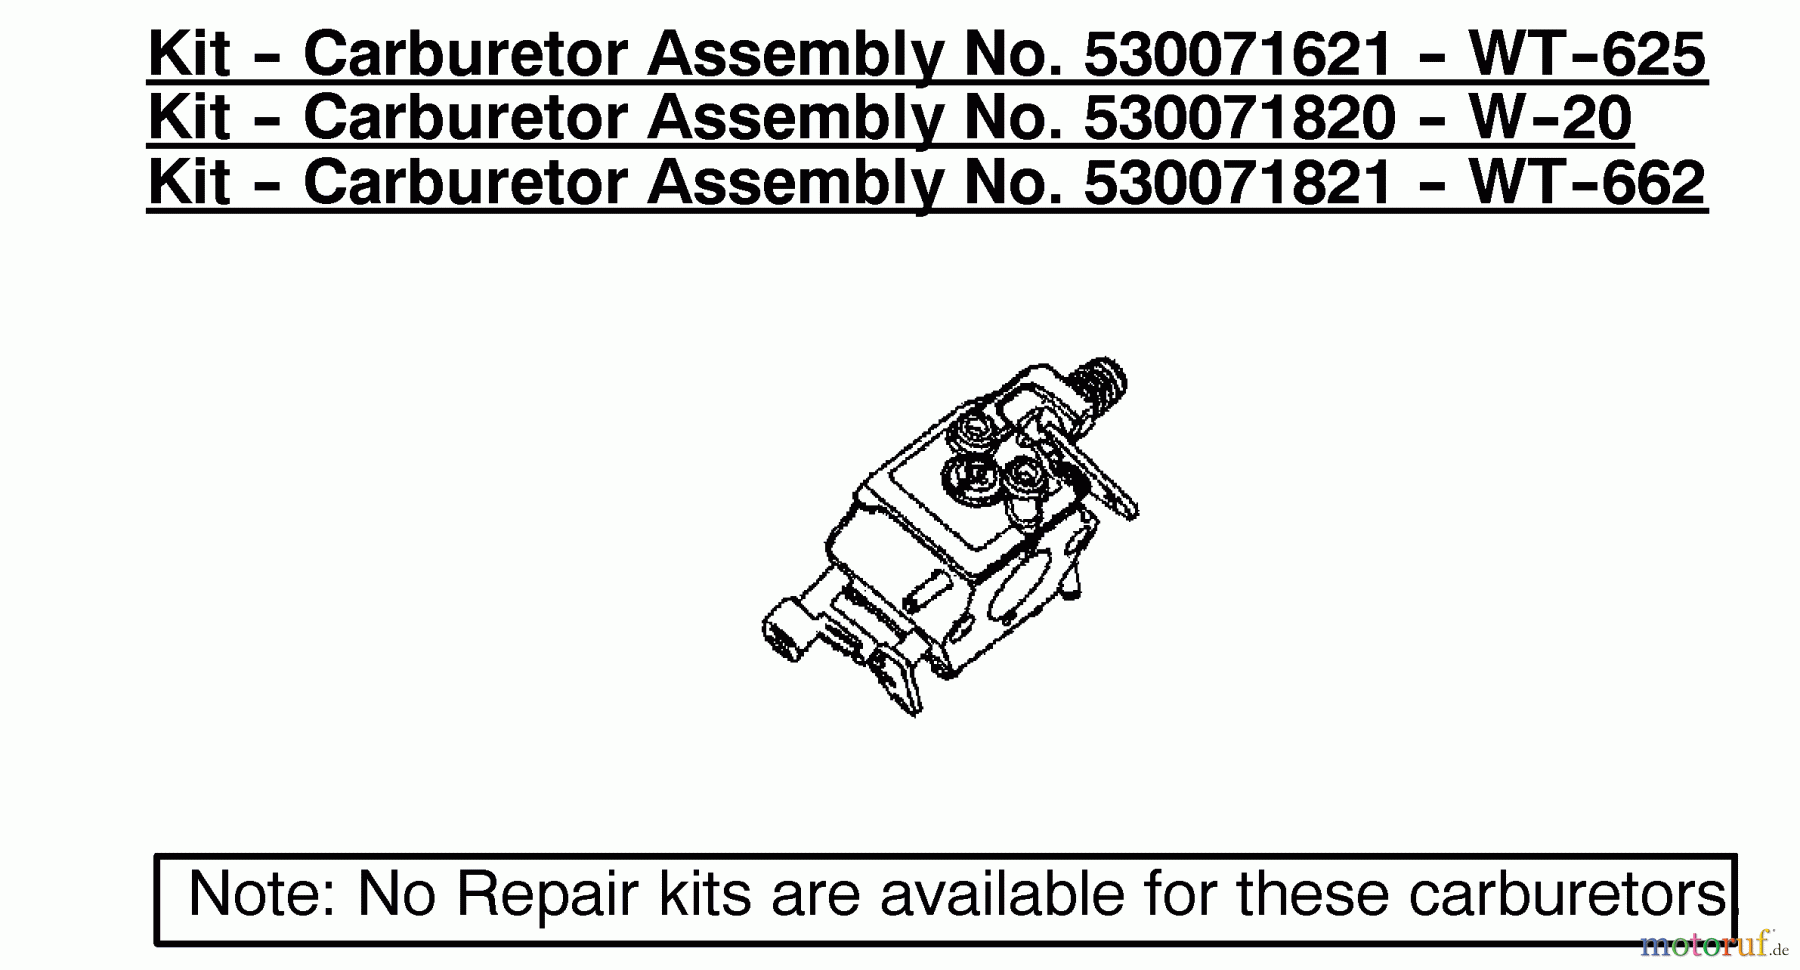  Poulan / Weed Eater Motorsägen 2250 (Type 3) - Poulan Woodmaster Chainsaw Kit - Carburetor Assembly 530071621/530071820/530071821